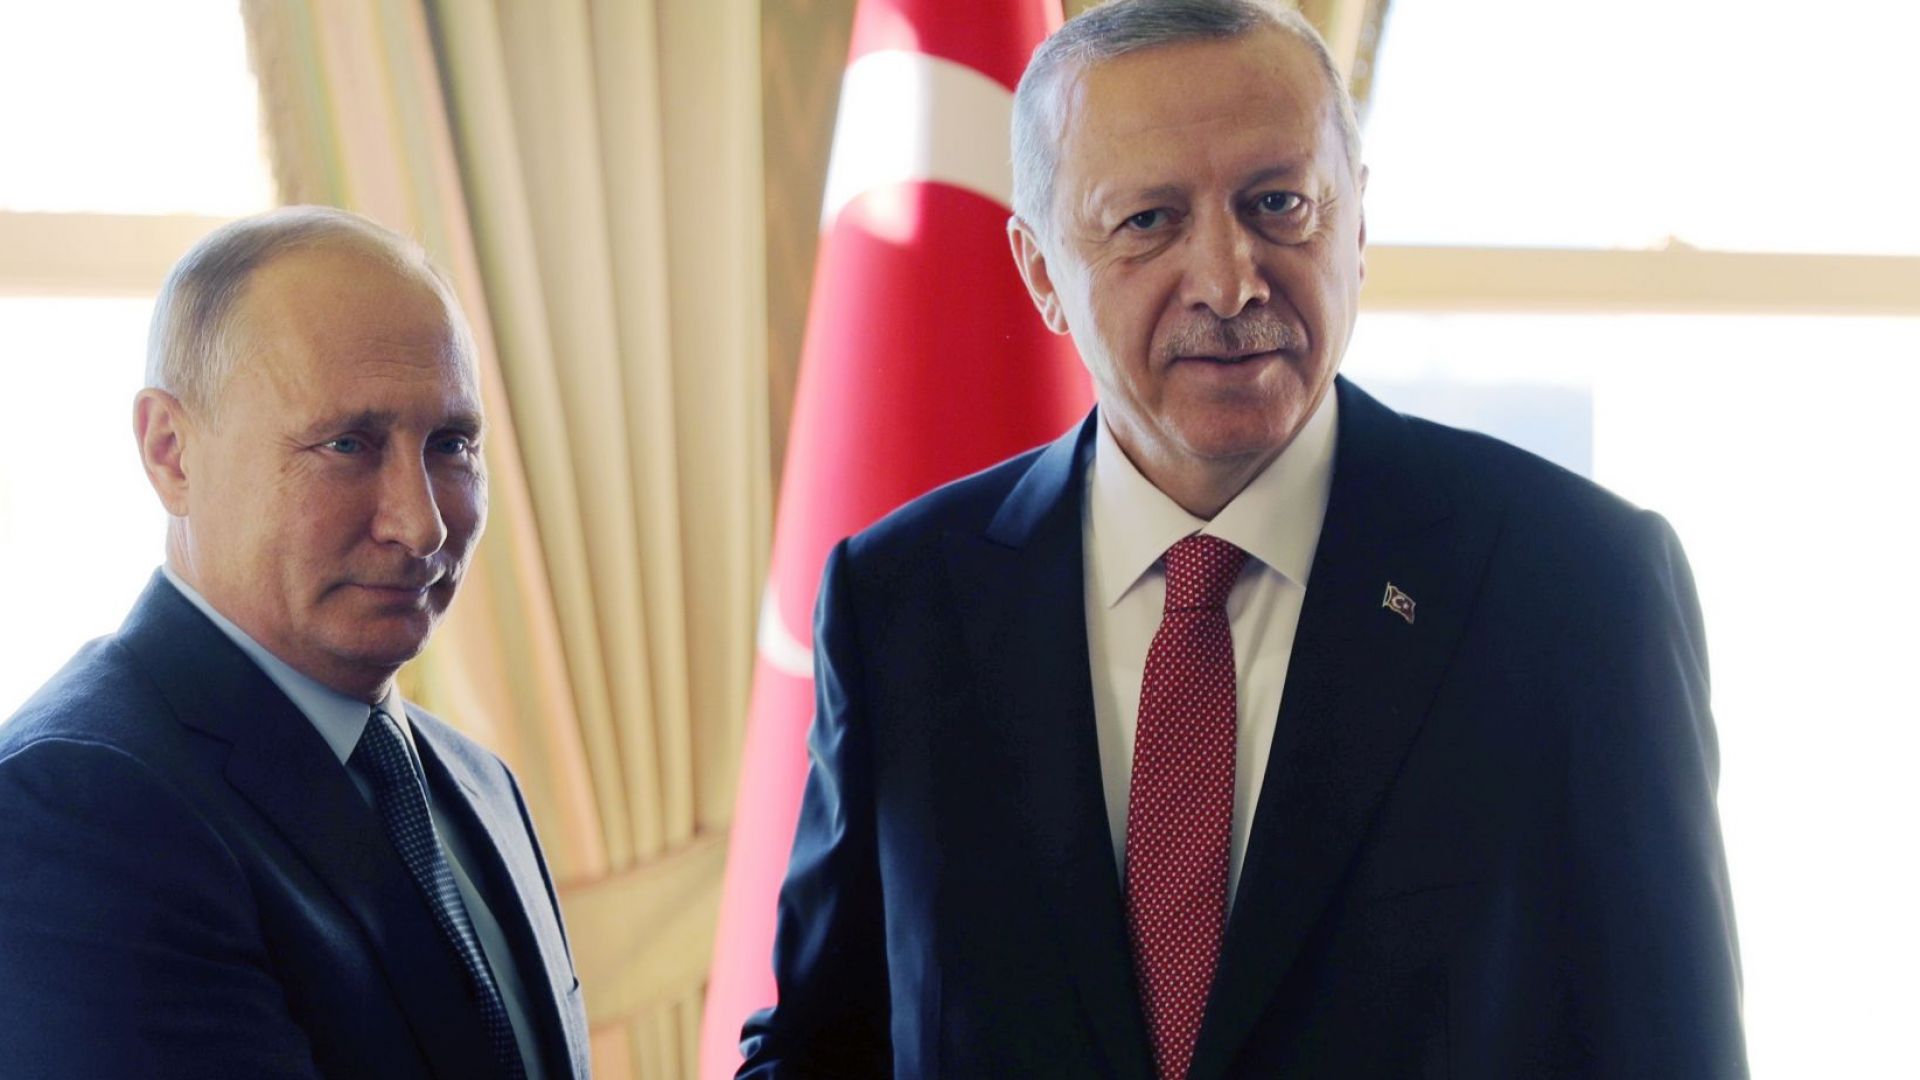 Путин адмирира Ердоган, газът през Турция тръгва догодина